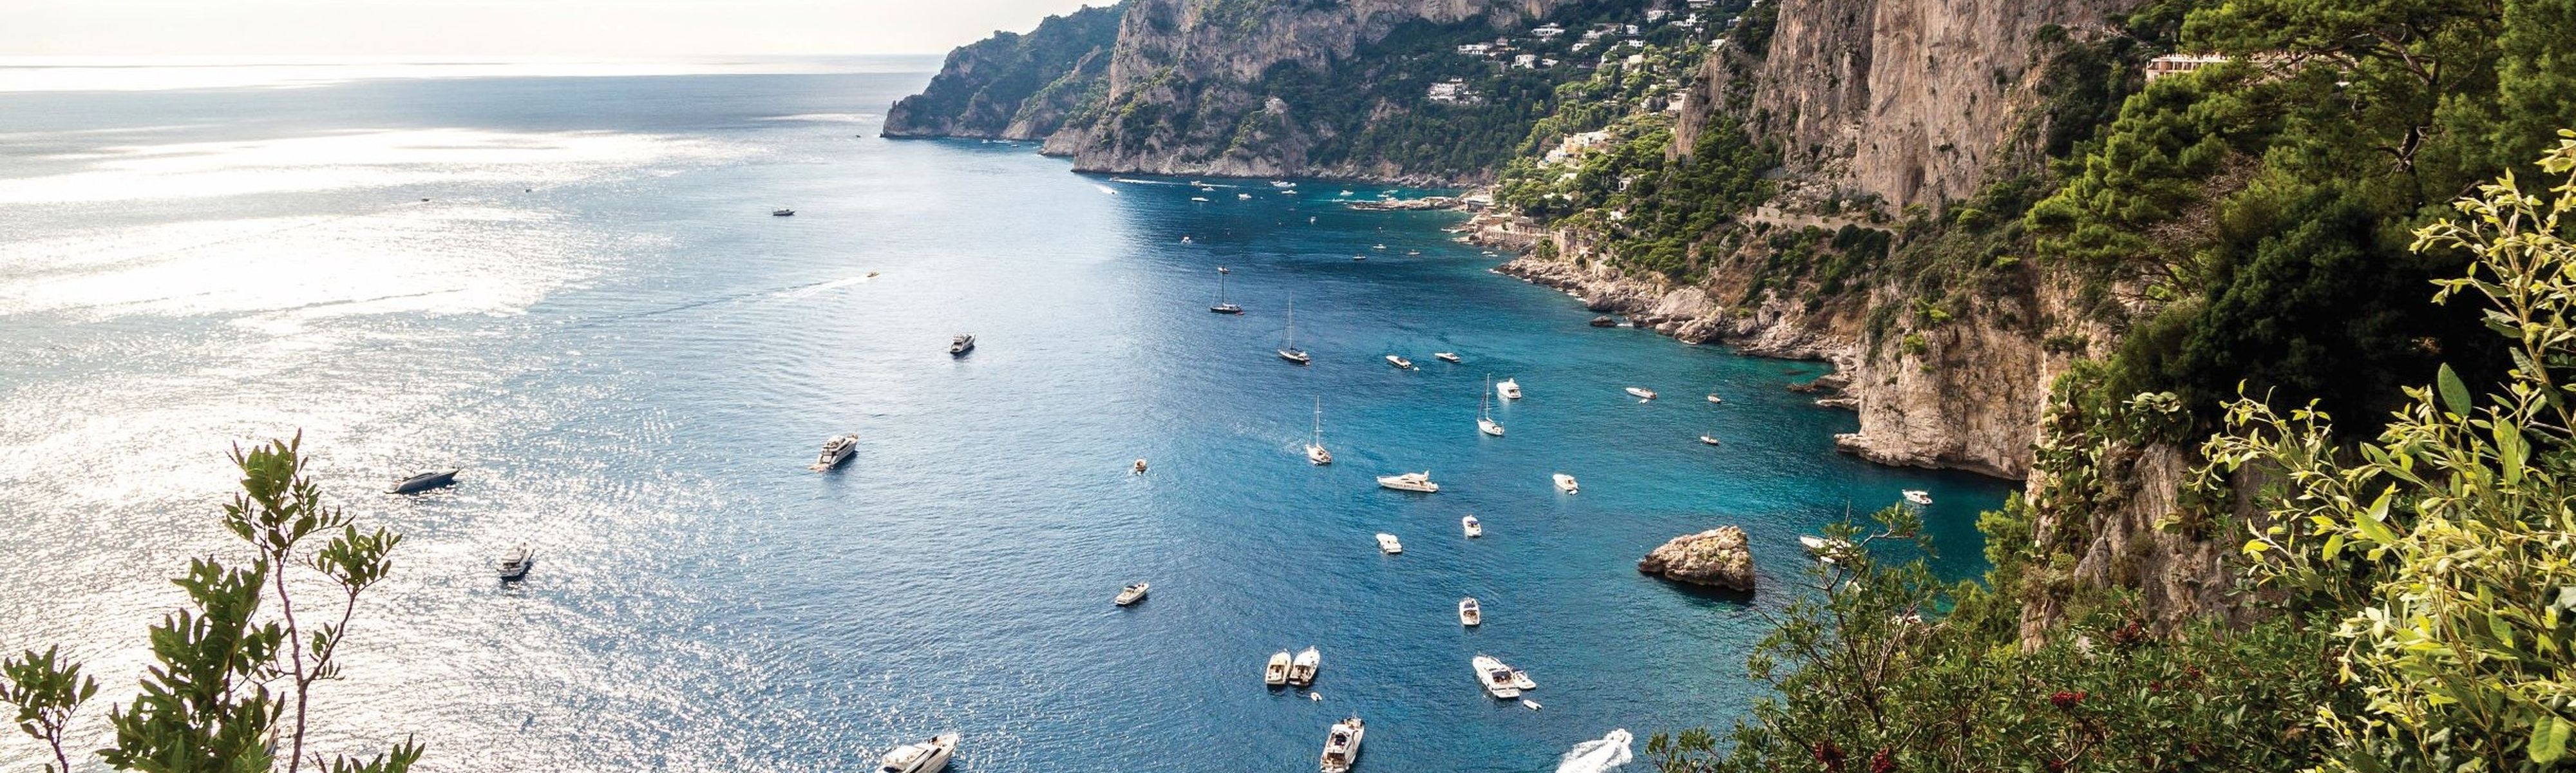 boats riding by coastline of island of capri in italy